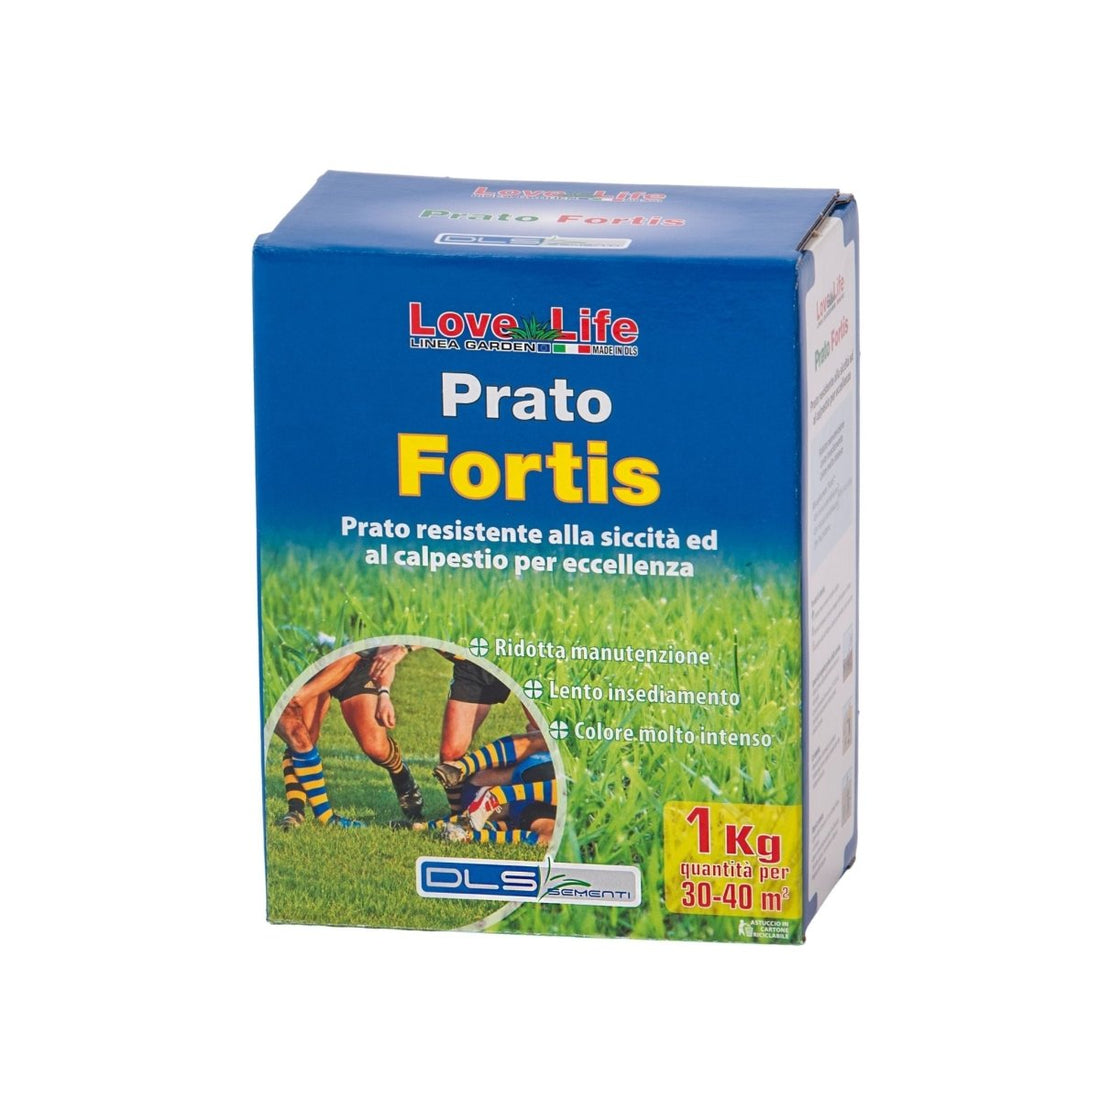 PRATO FORTIS - Professional EU - Mondoprato